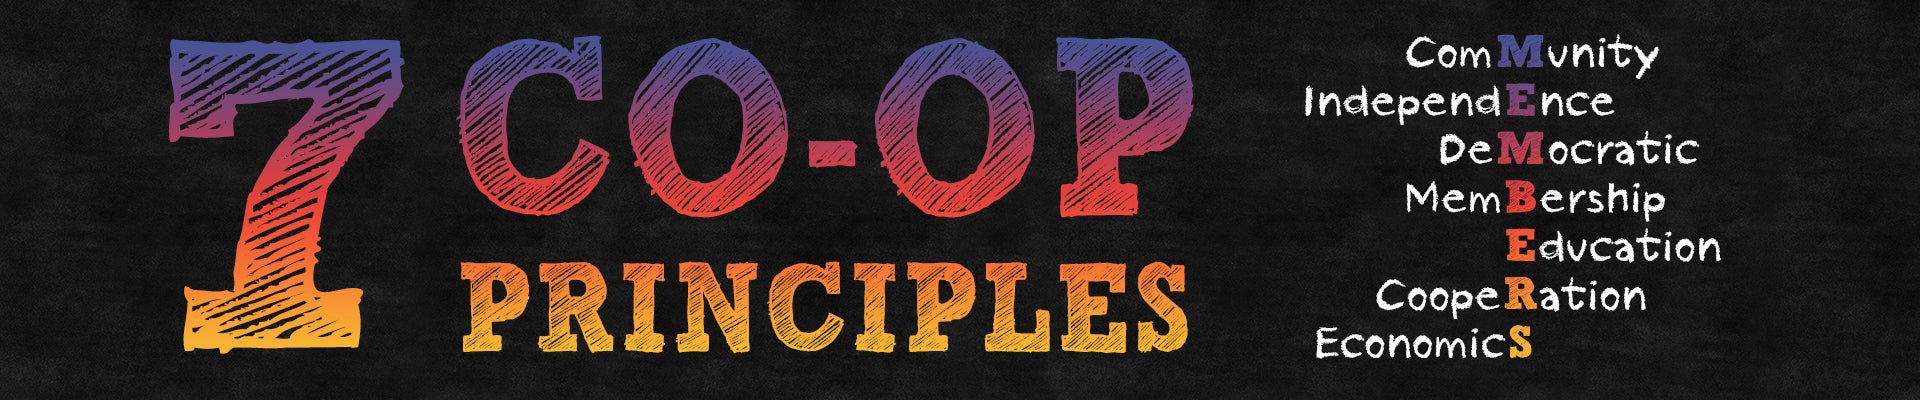  7 Coop Principles